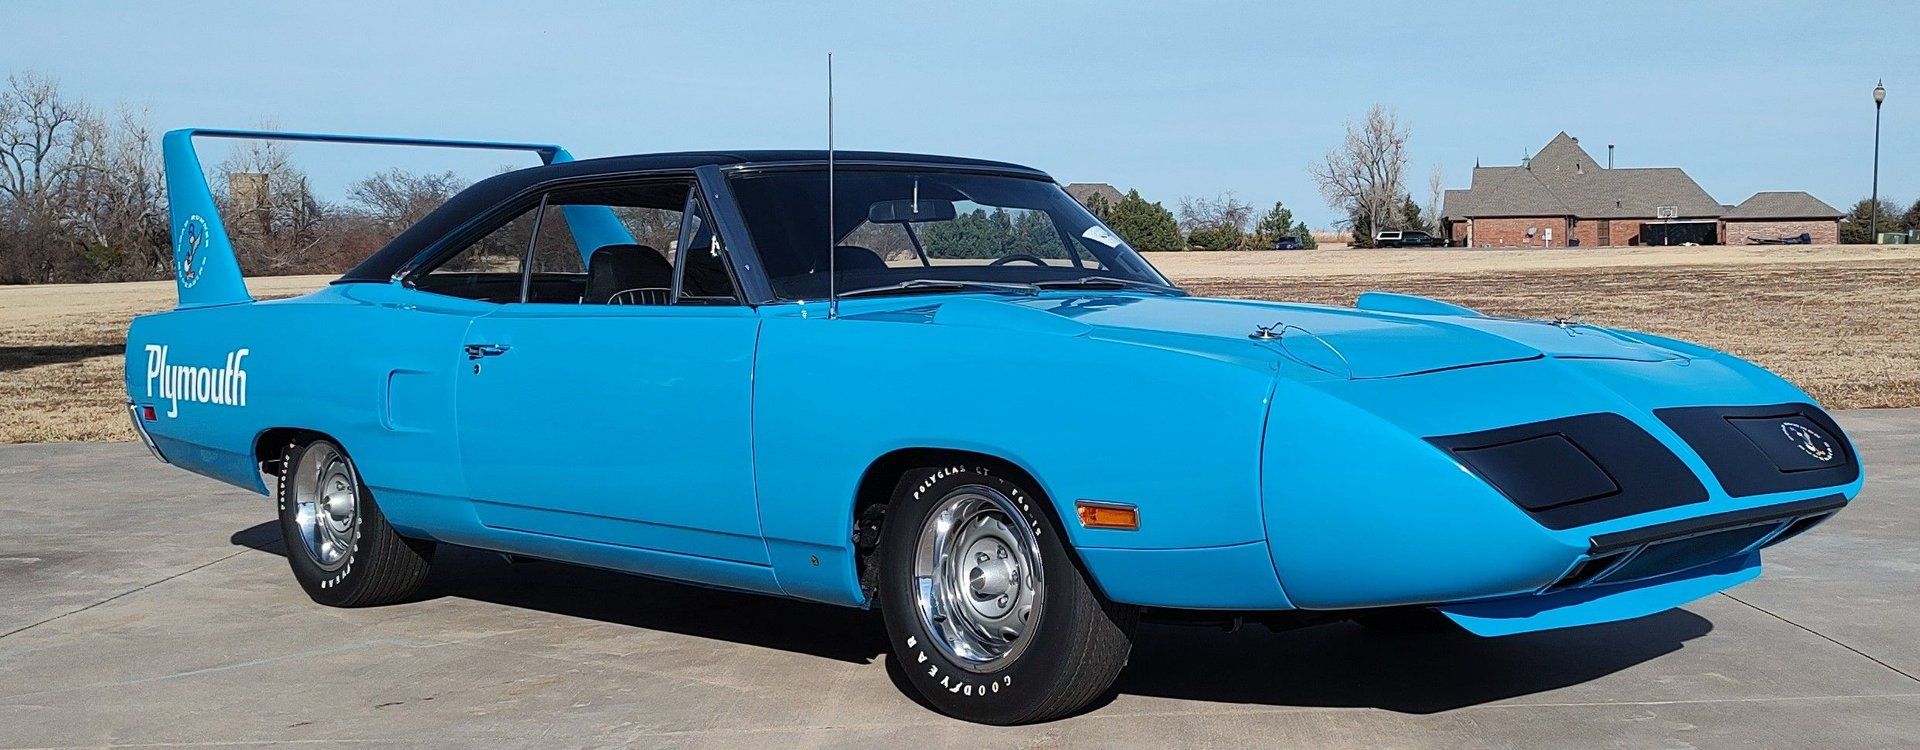 Petty Blue 1970 Plymouth Superbird